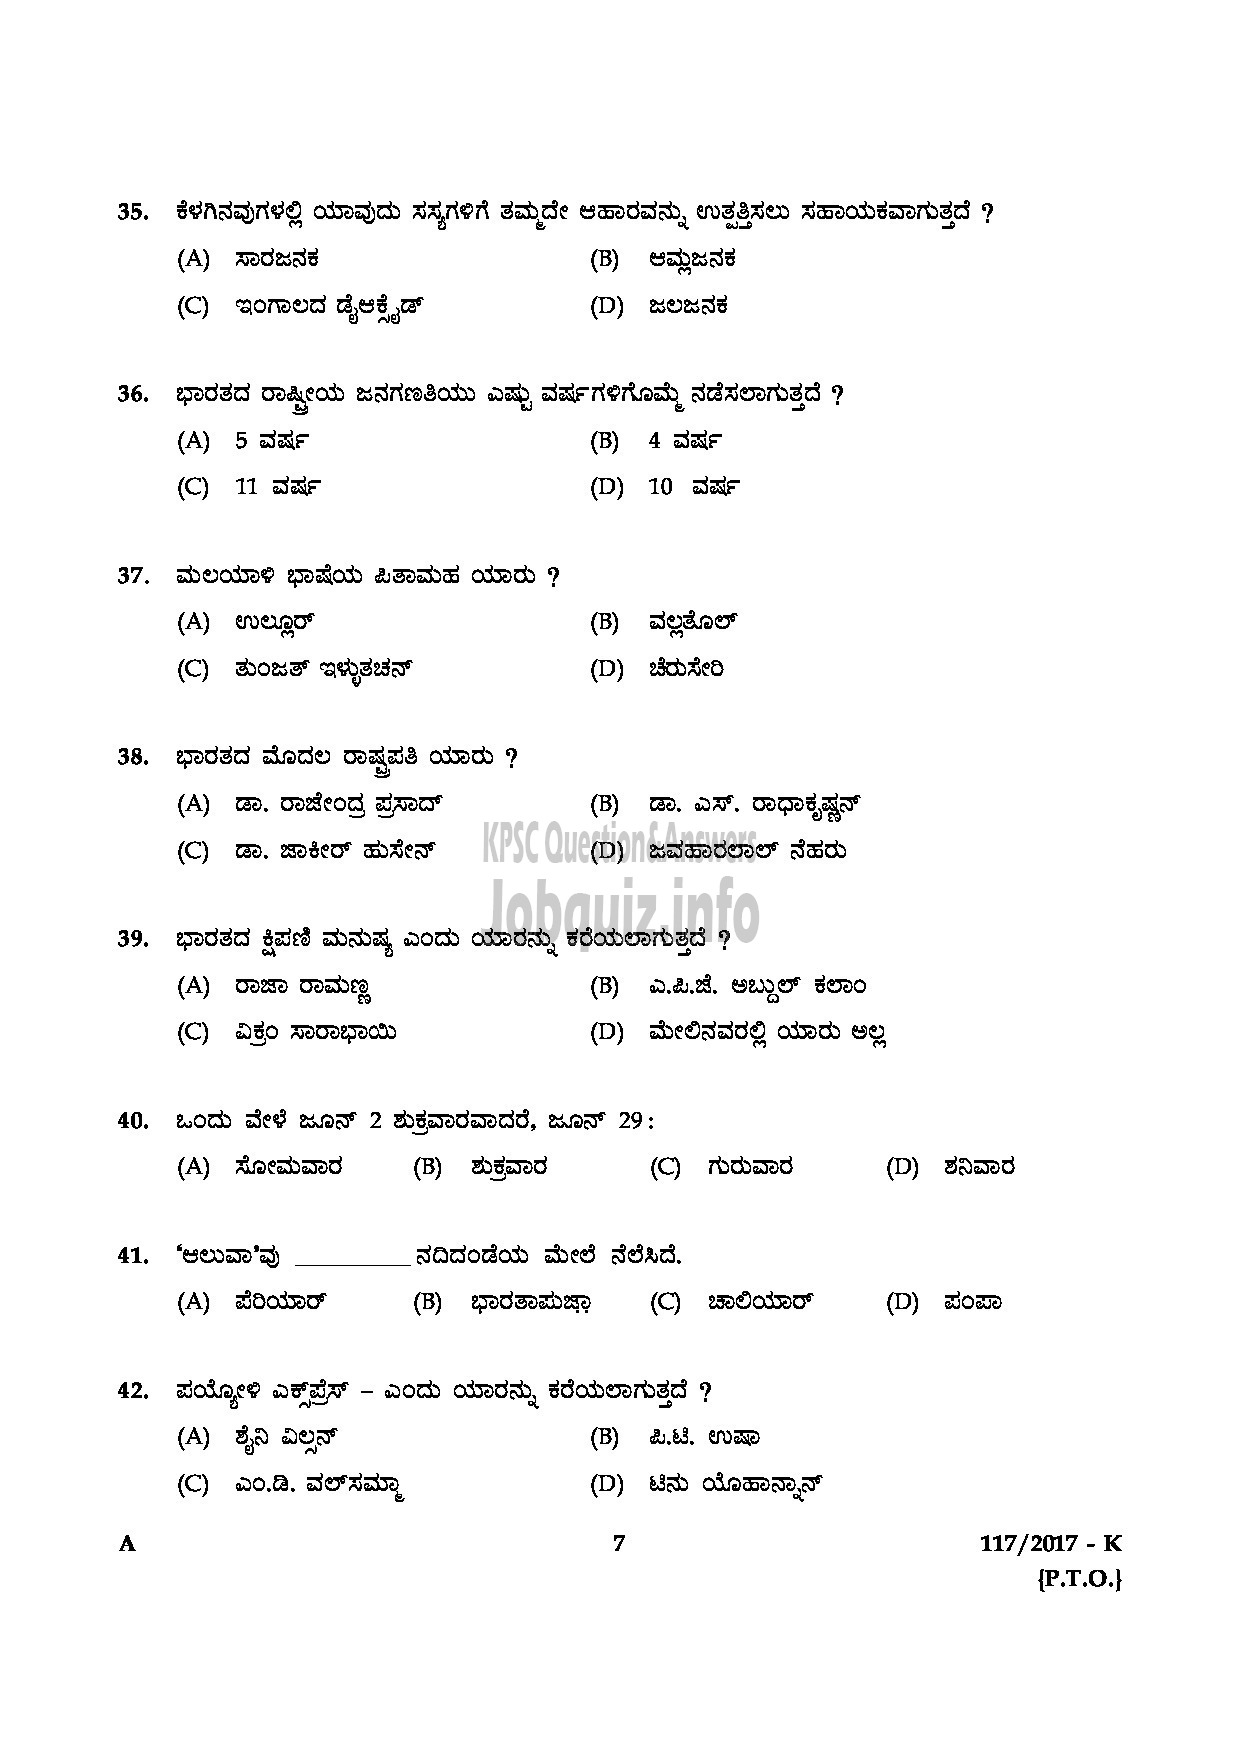 Kerala PSC Question Paper - LAST GRADE SERVANTS VARIOUS GOVT.OWNED COMPANIES/CORPORATIONS/BOARDS KANNADA-7